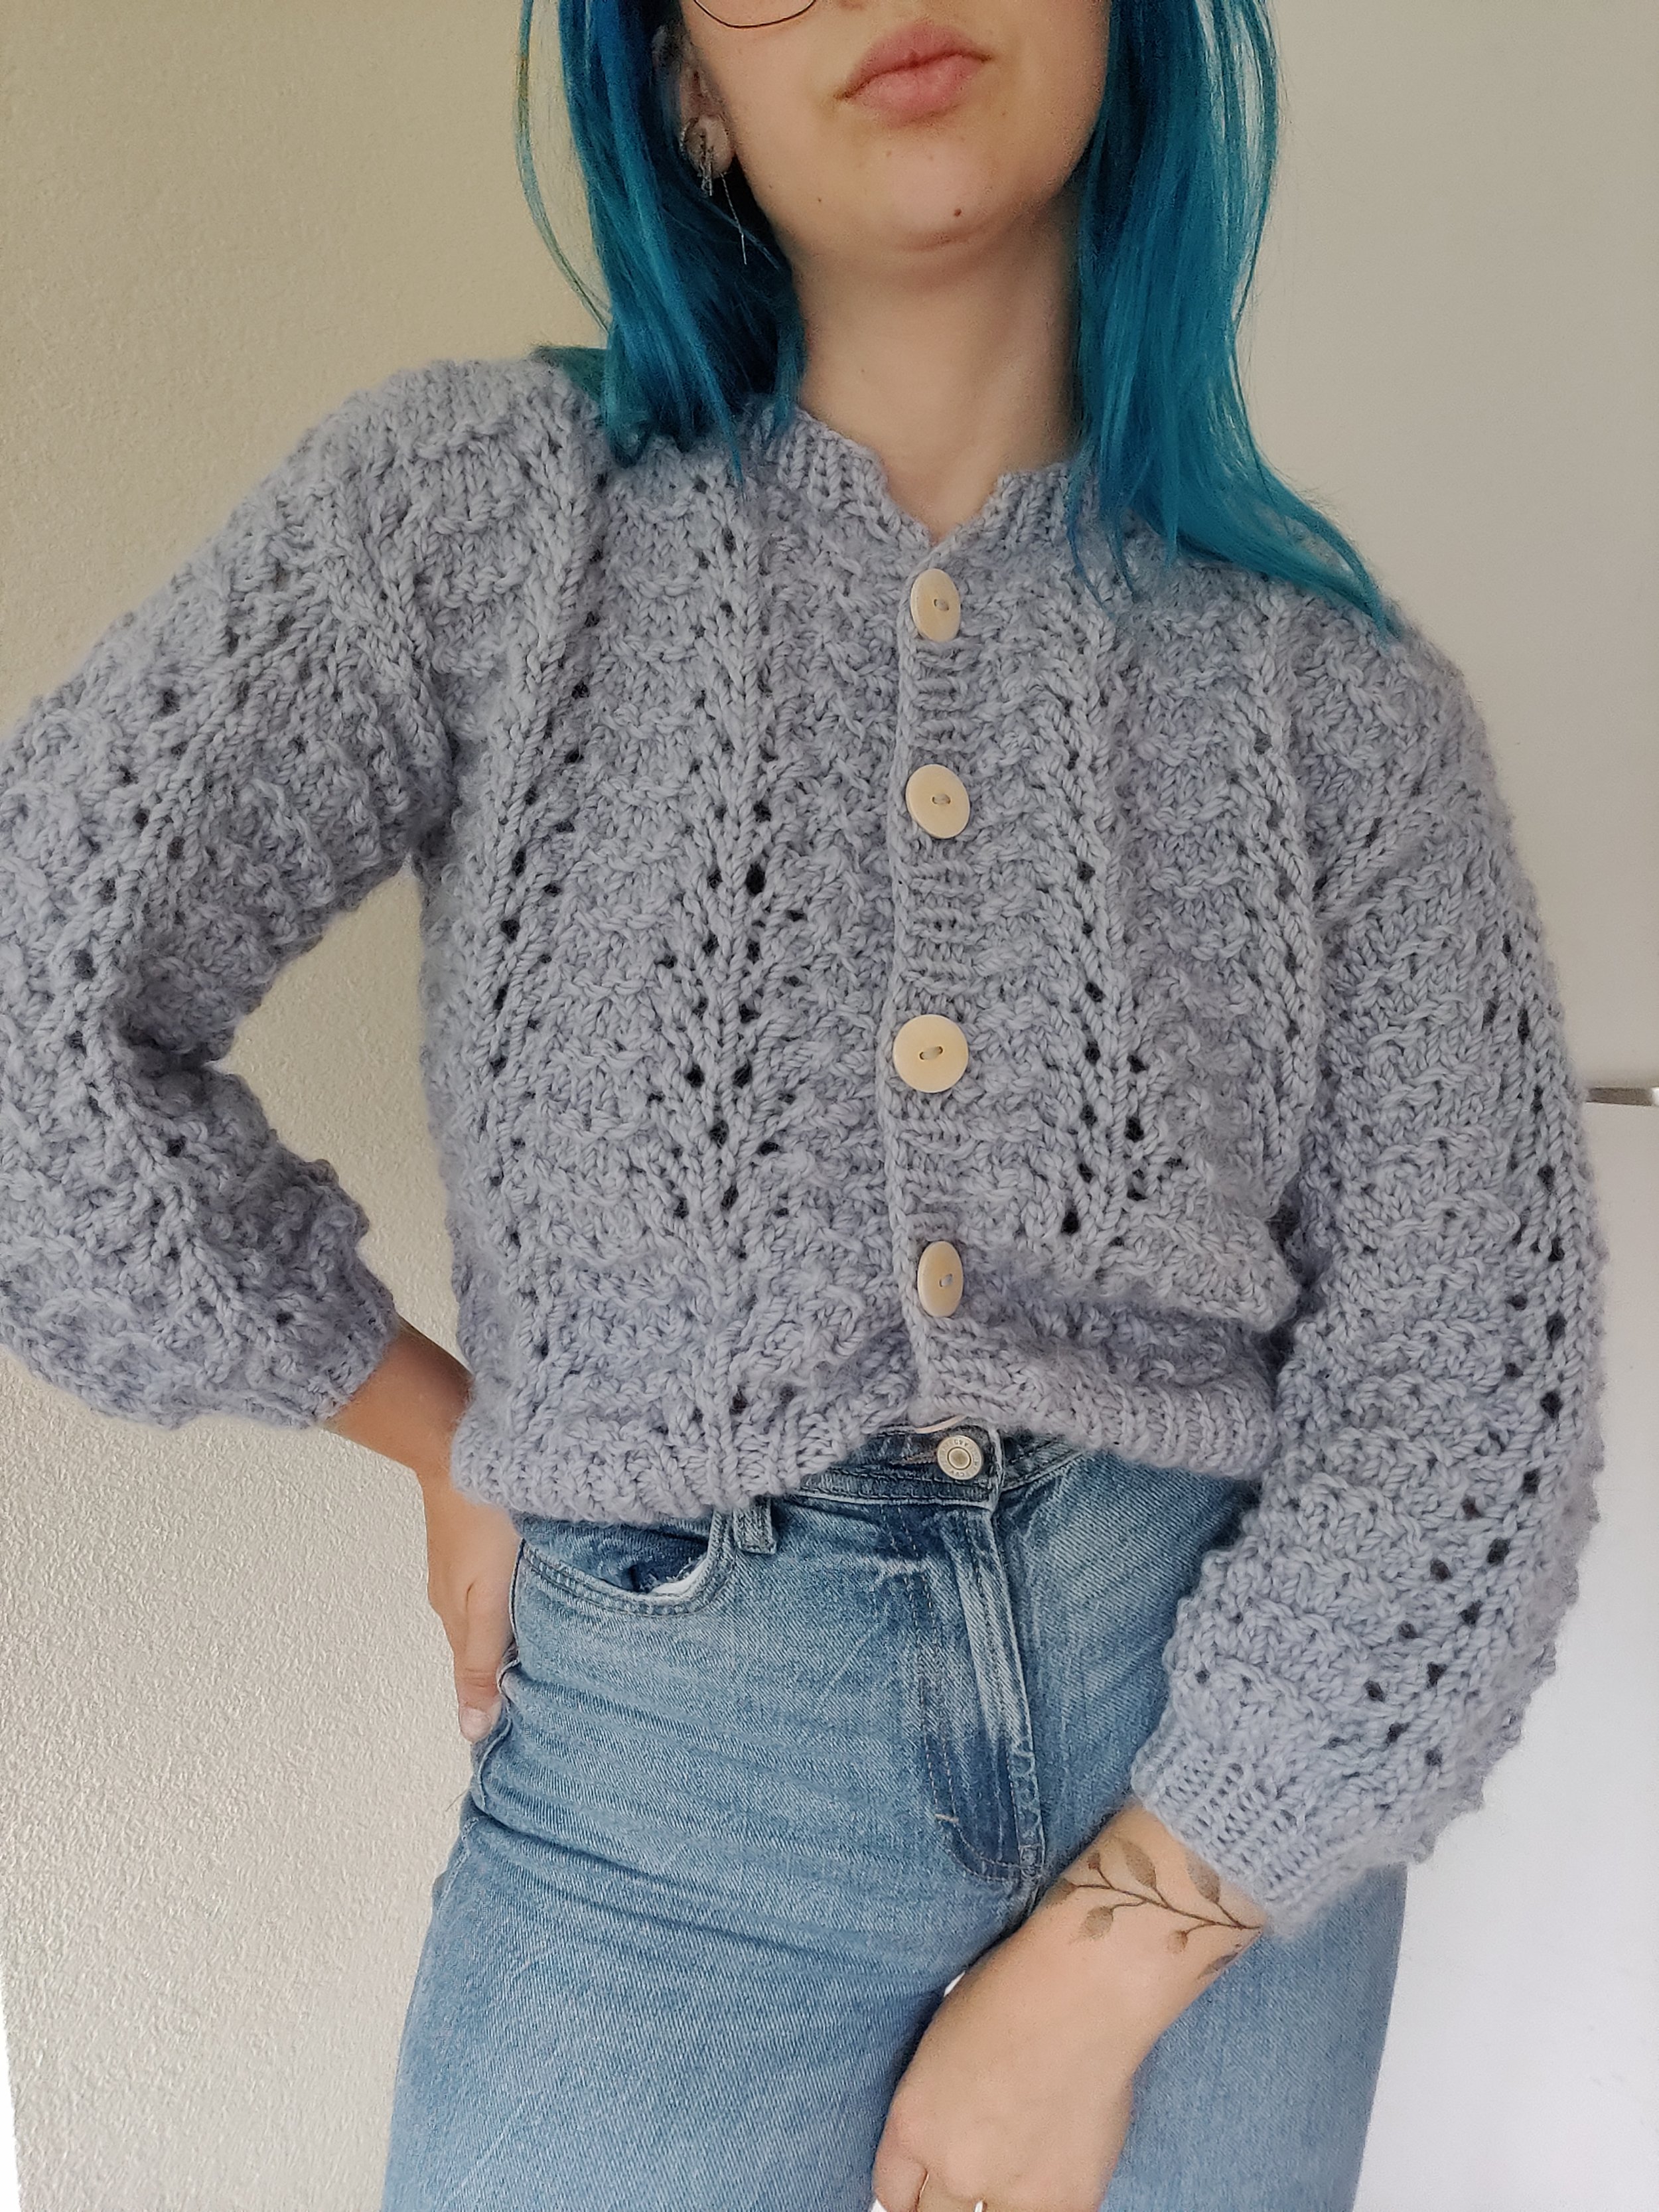 Fashionably Lace Cardigan Lite — karas.knit.eng